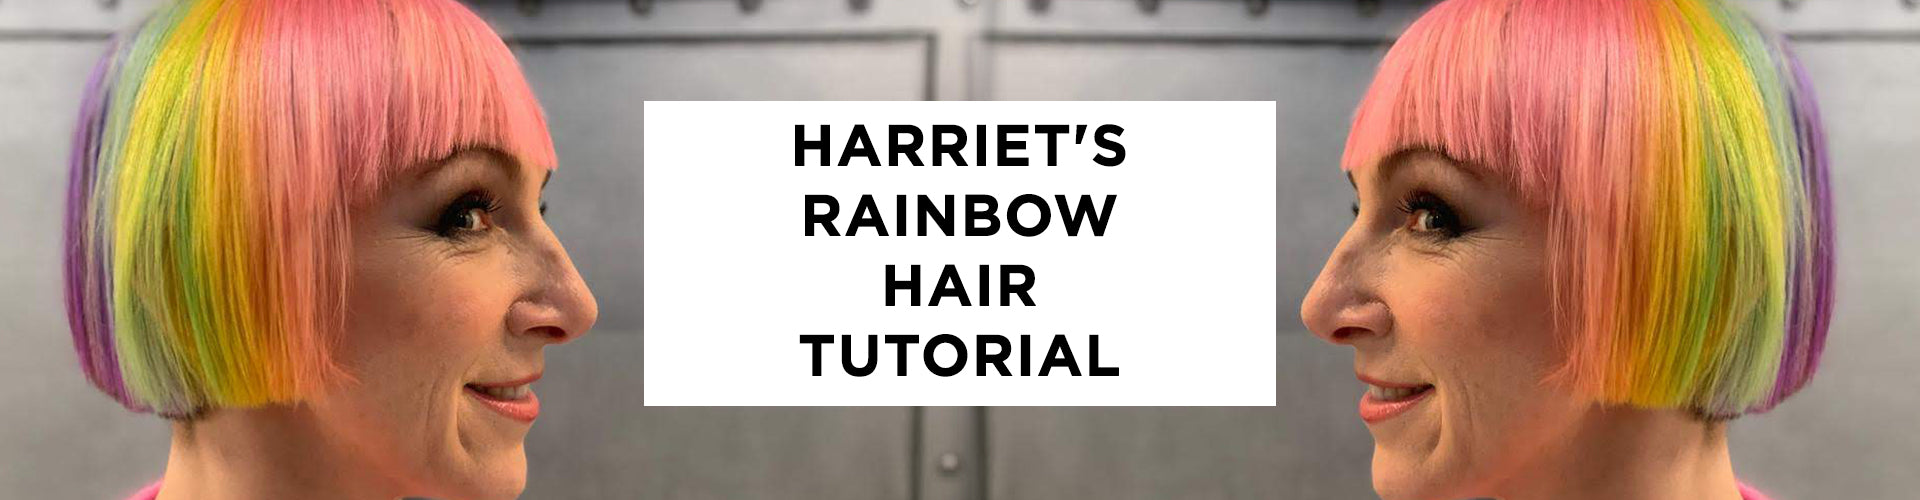 Harriet's Rainbow Hair Tutorial